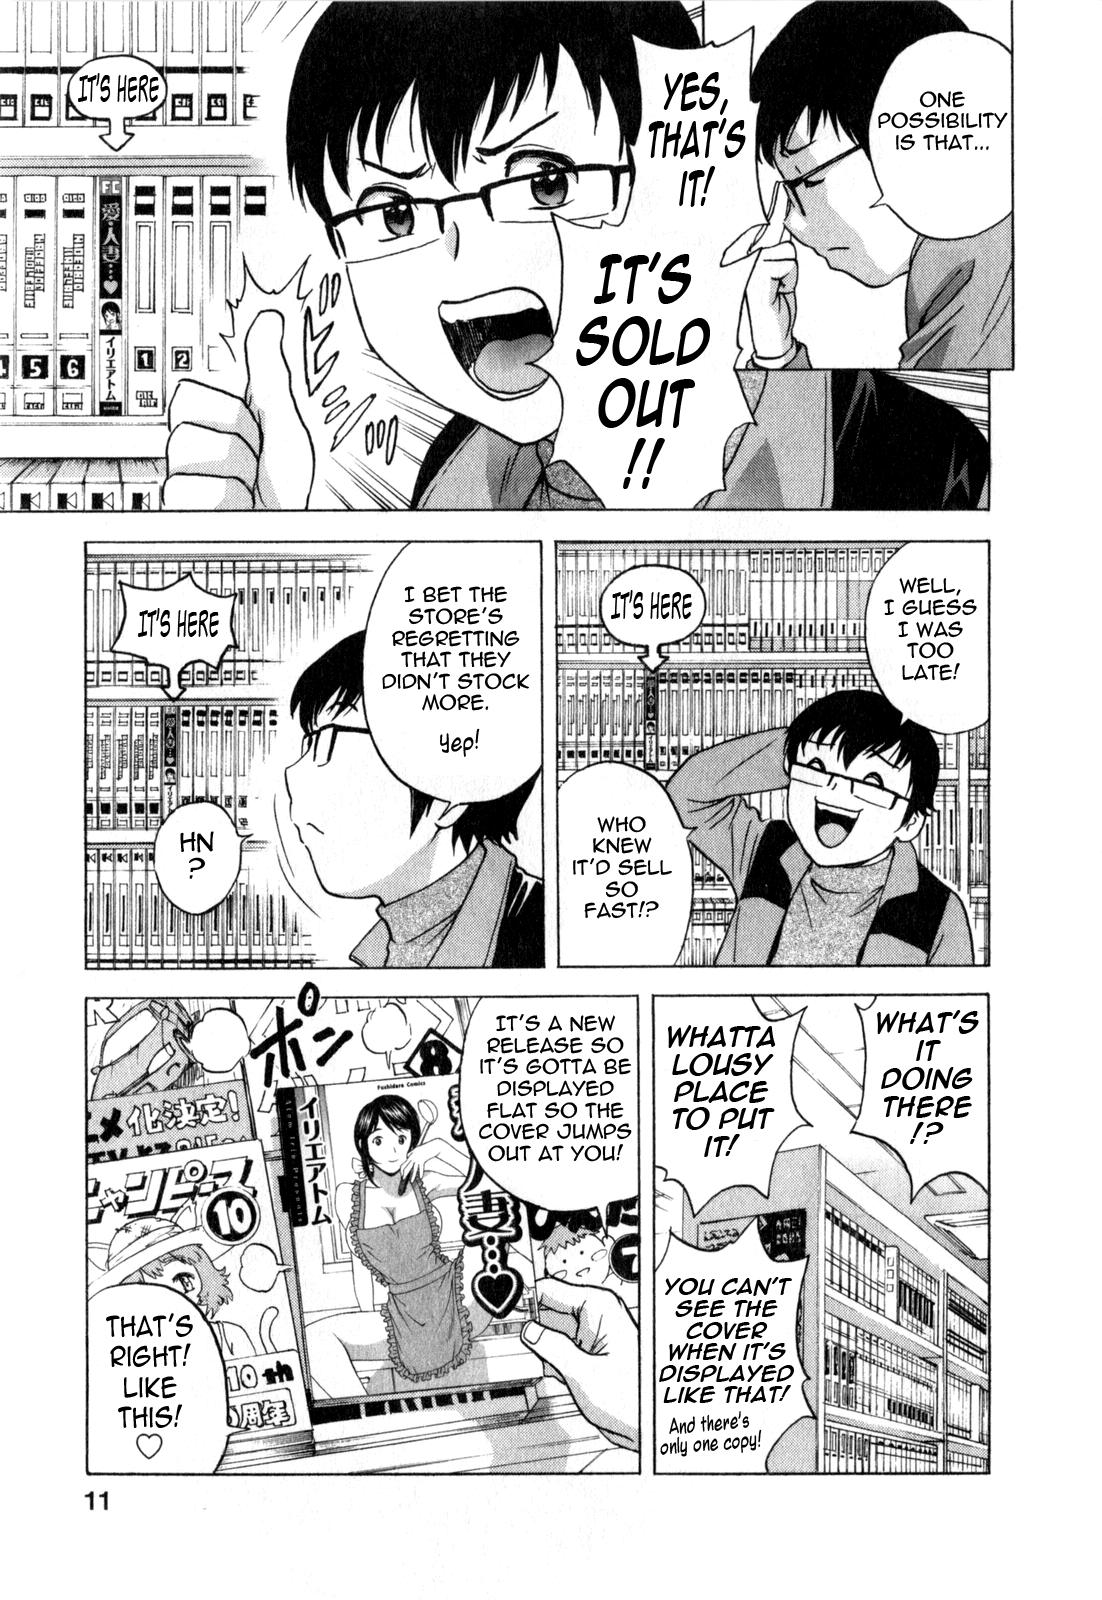 [Hidemaru] Life with Married Women Just Like a Manga 3 - Ch. 1-6 [English] {Tadanohito} 12